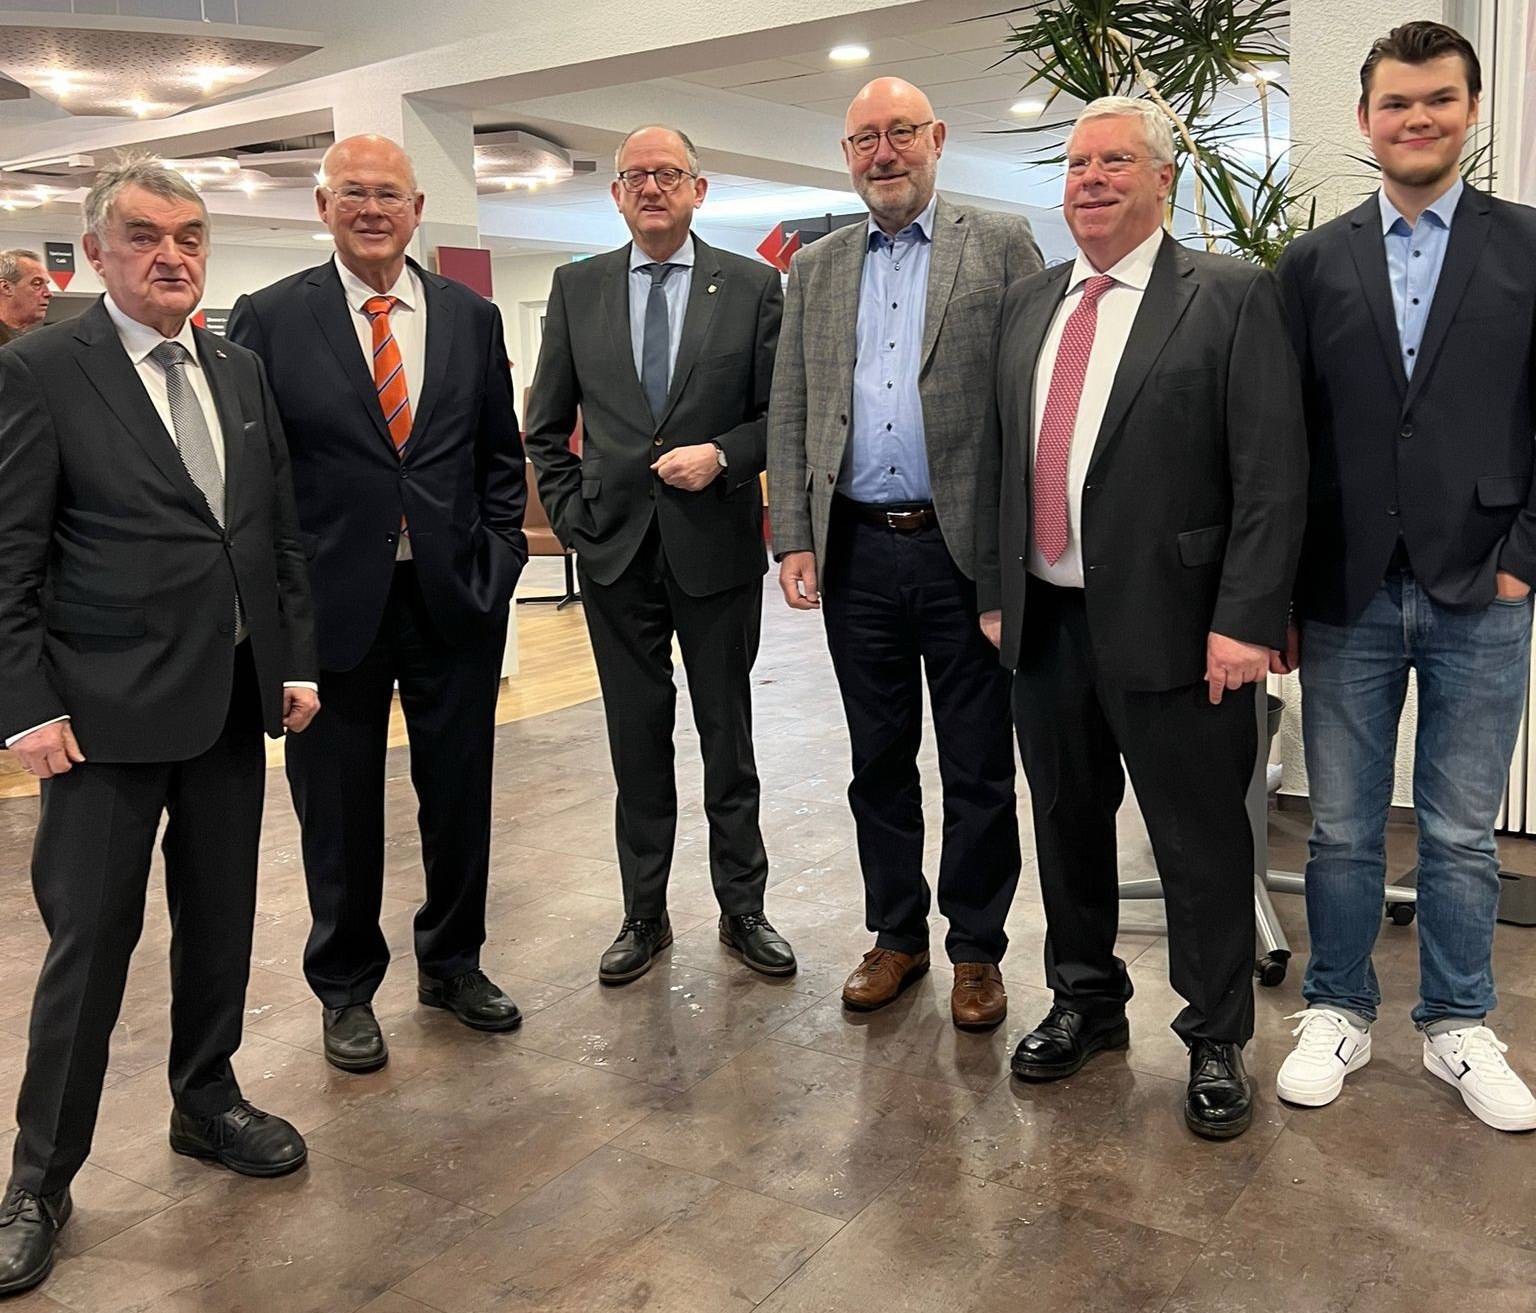  Von li.: Herbert Reul, Dr. Rolf Köster, Rainer Spiecker, Dr. Johannes Slawig, Jürgen Hardt und Alexej Hundt. 